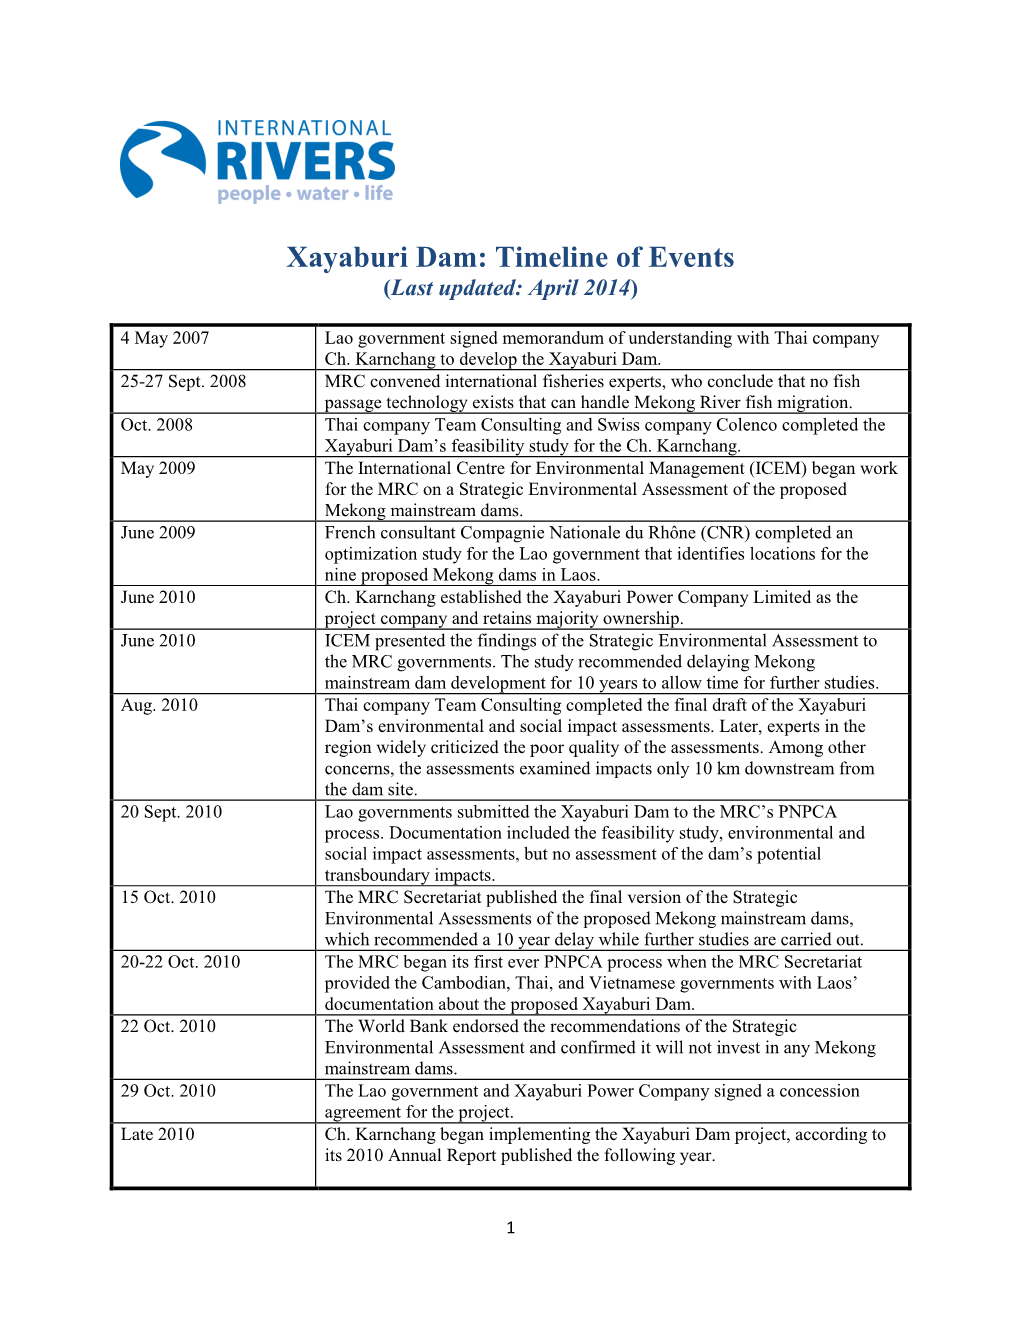 Xayaburi Dam: Timeline of Events (Last Updated: April 2014)